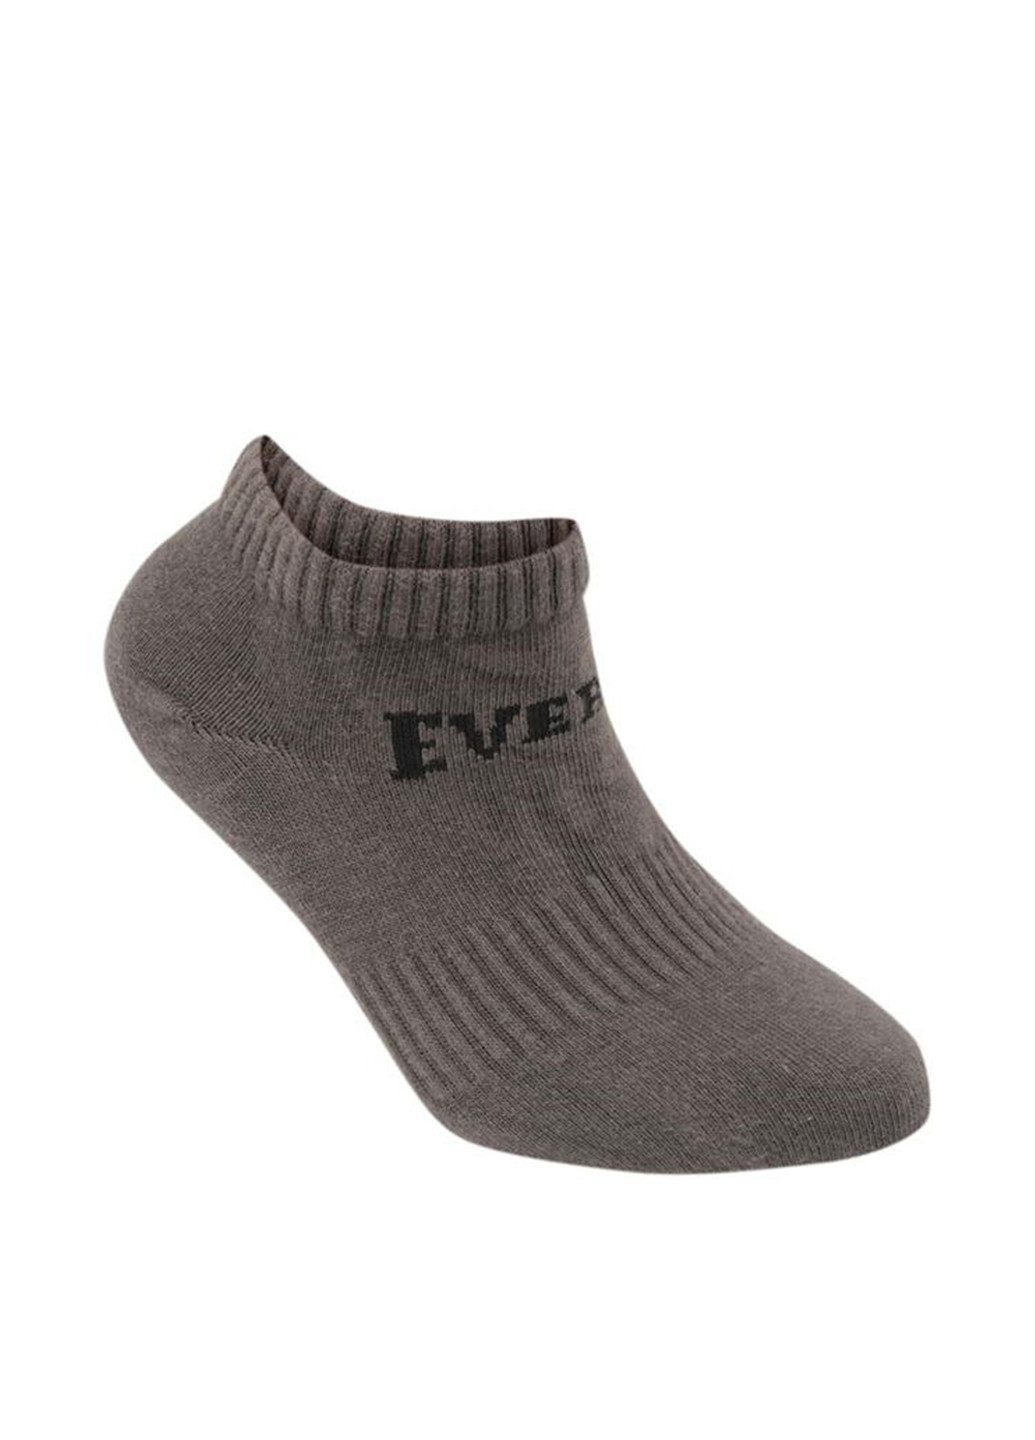 Шкарпетки (3 пари) Everlast (235210500)